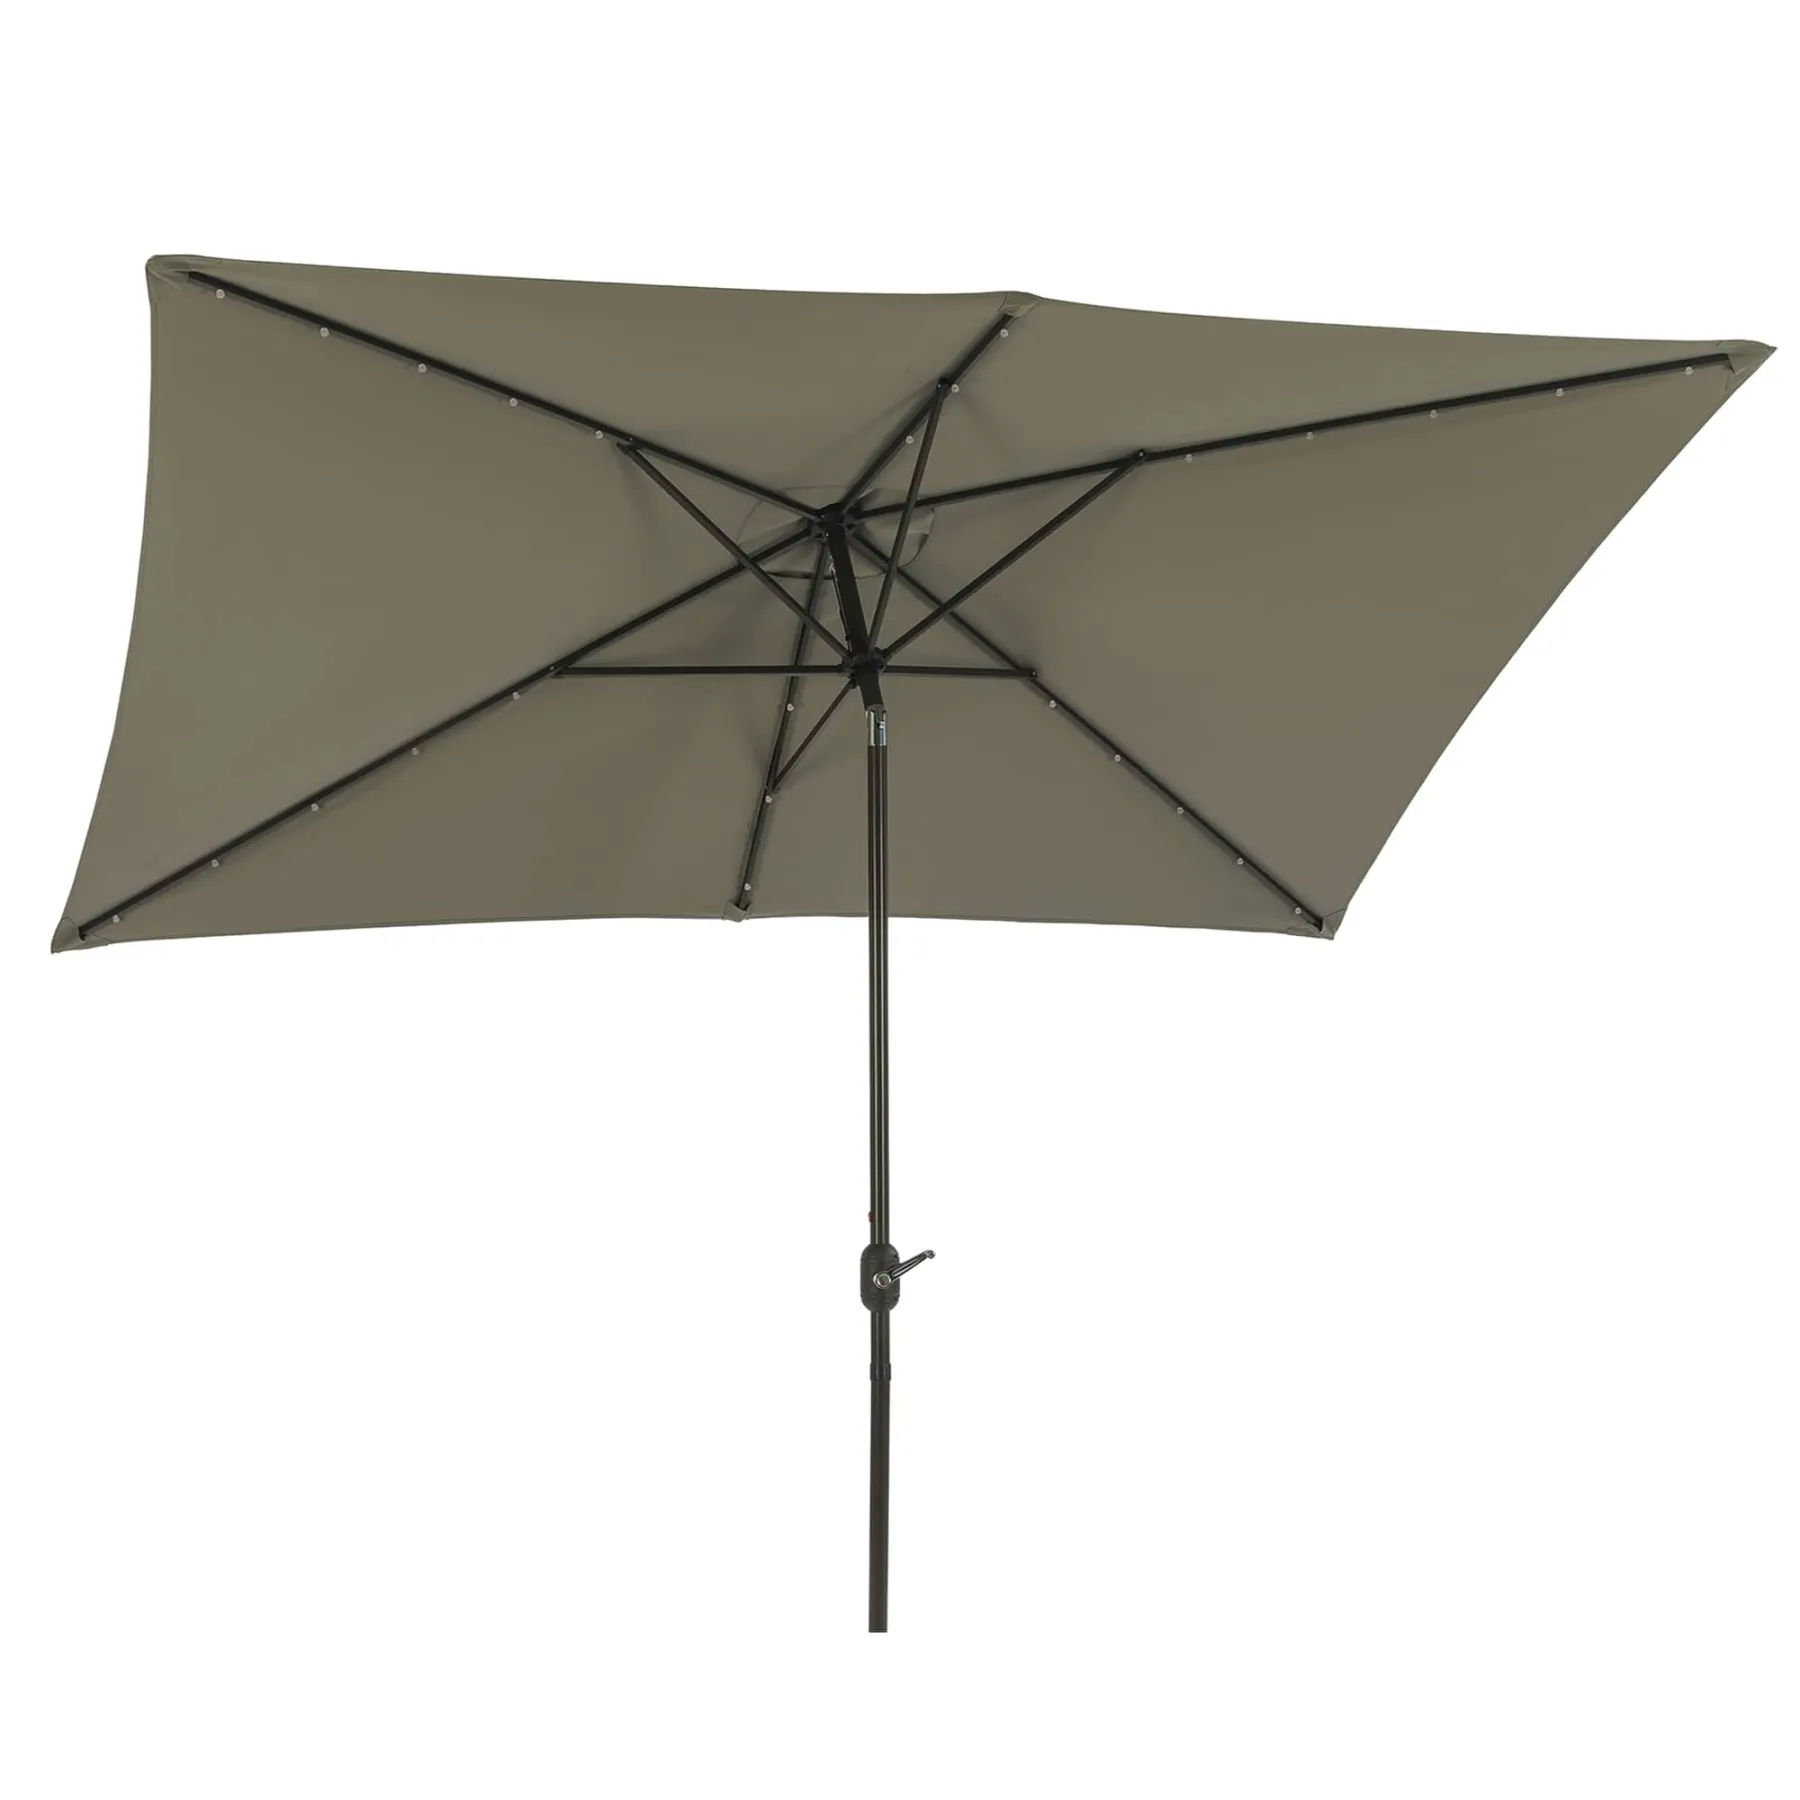 CASAINC 10Ft Rectangular Outdoor Umbrella with 26 LED Lights in Gray